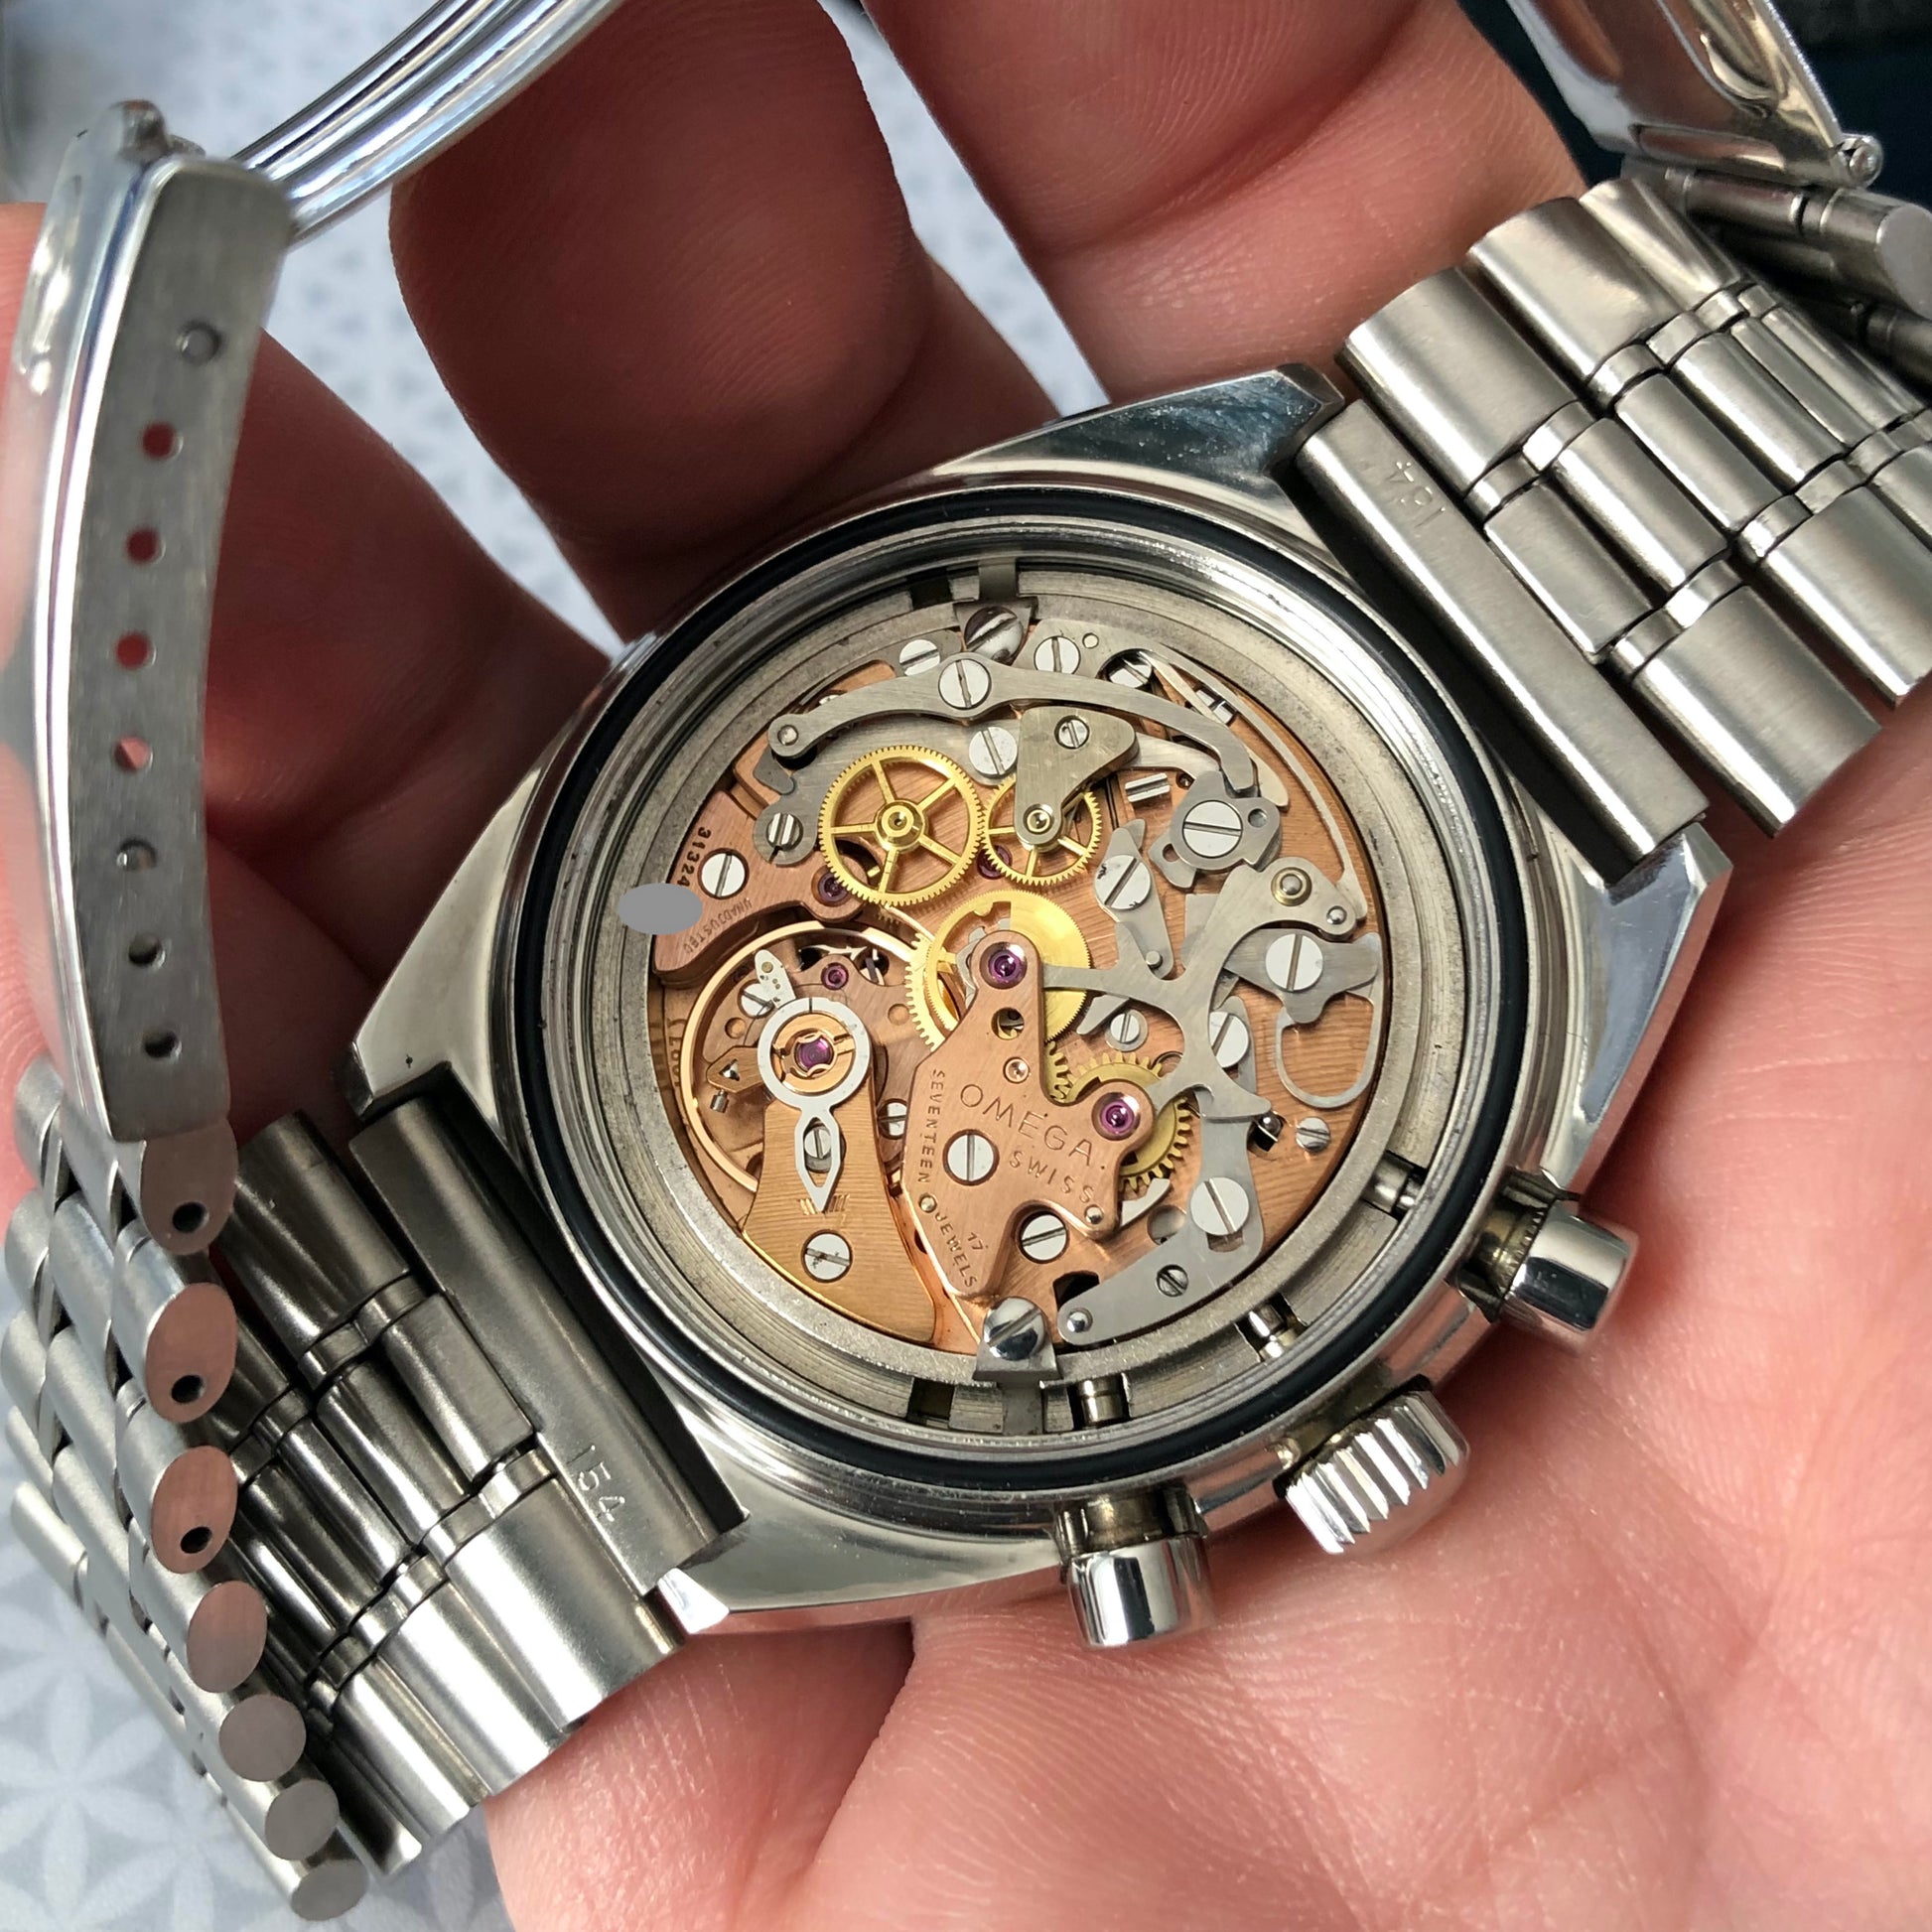 1969 Vintage Omega Speedmaster Mk II 145.014 Racing Dial Chronograph Steel Wristwatch - Hashtag Watch Company